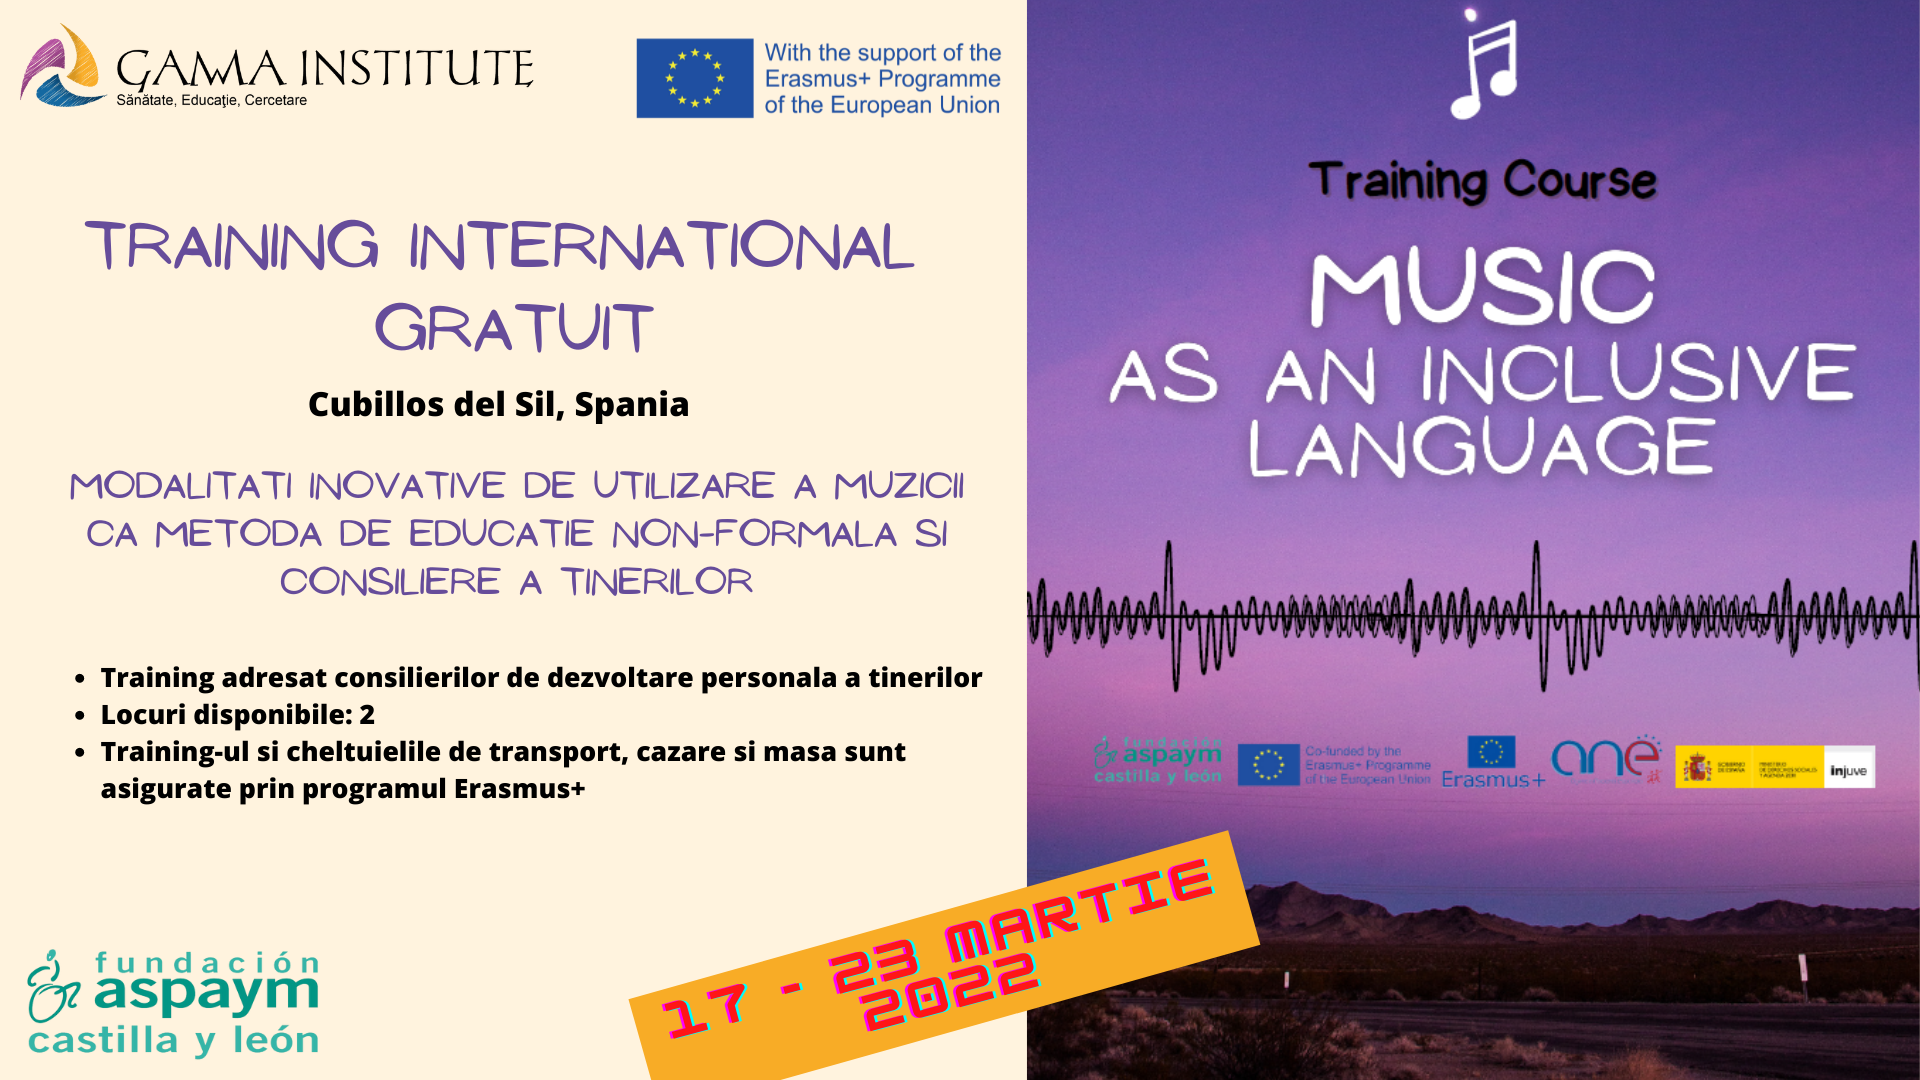 music_as_inclusive_language_gamma_institute.png